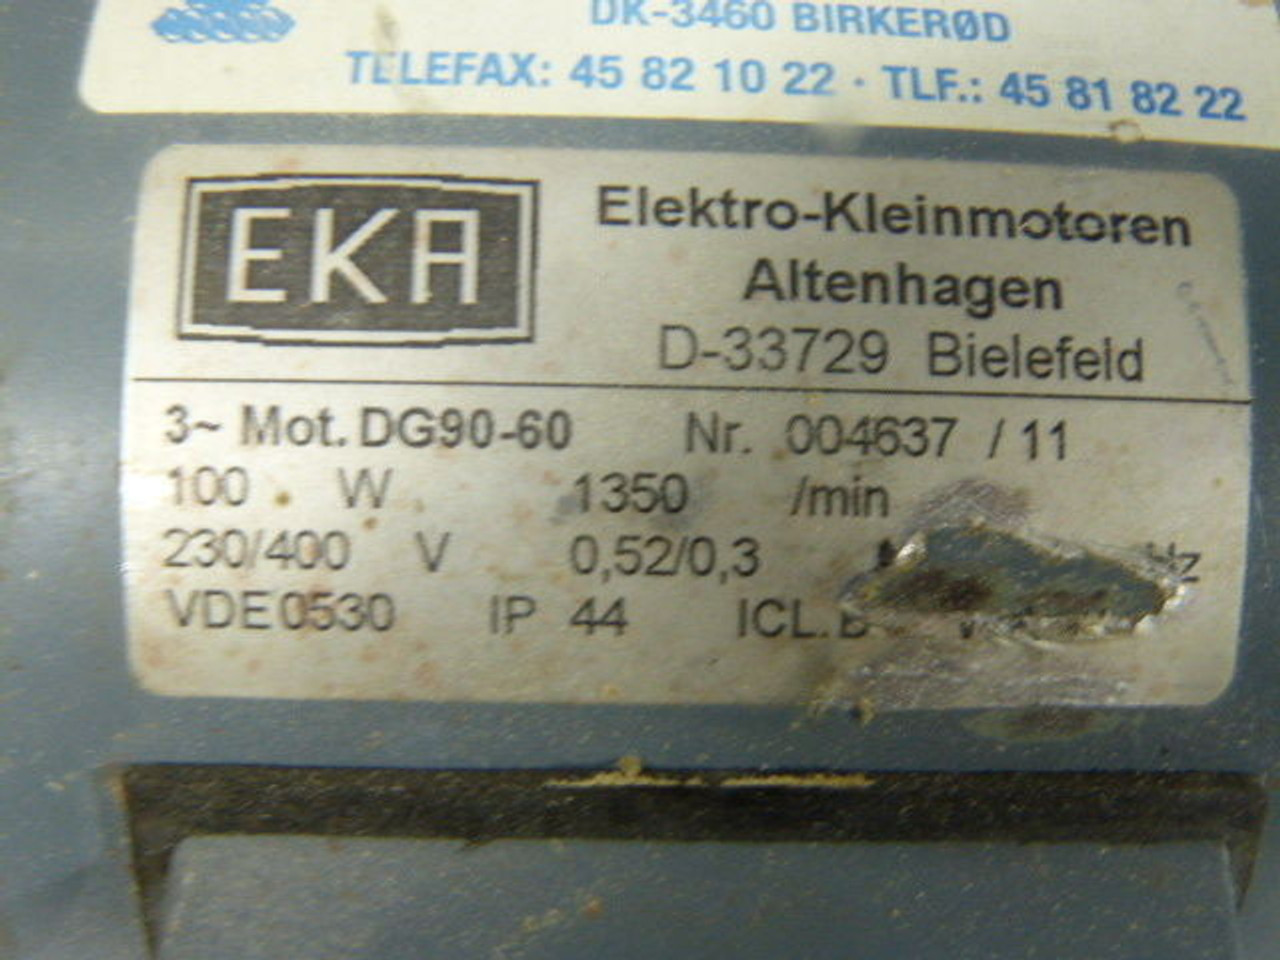 EKR 100W 1350RPM 230/400V 3Ph 0.52/0.3A 60Hz USED